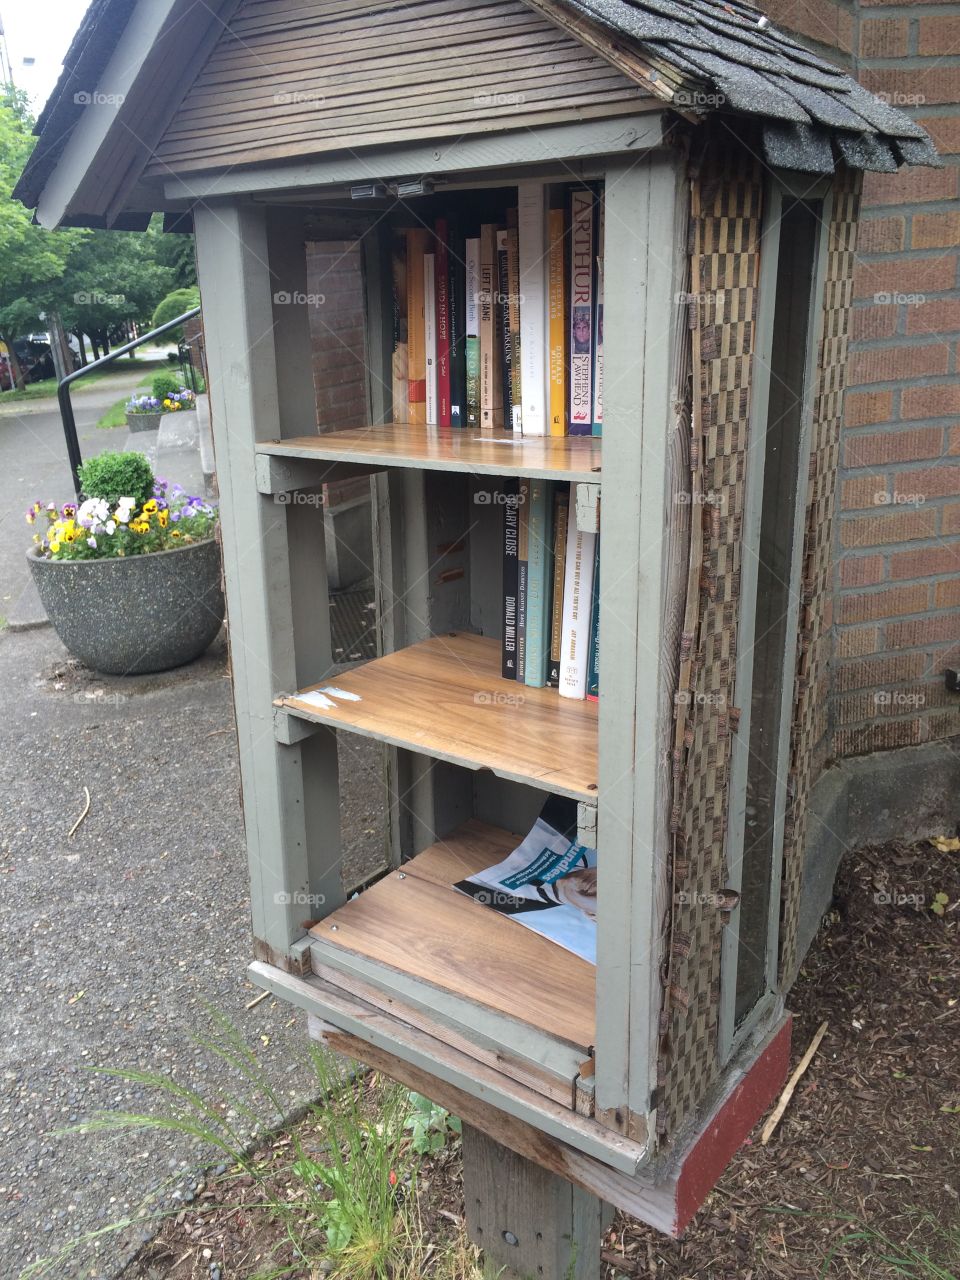 Rustic mini library on a Seattle street corner 